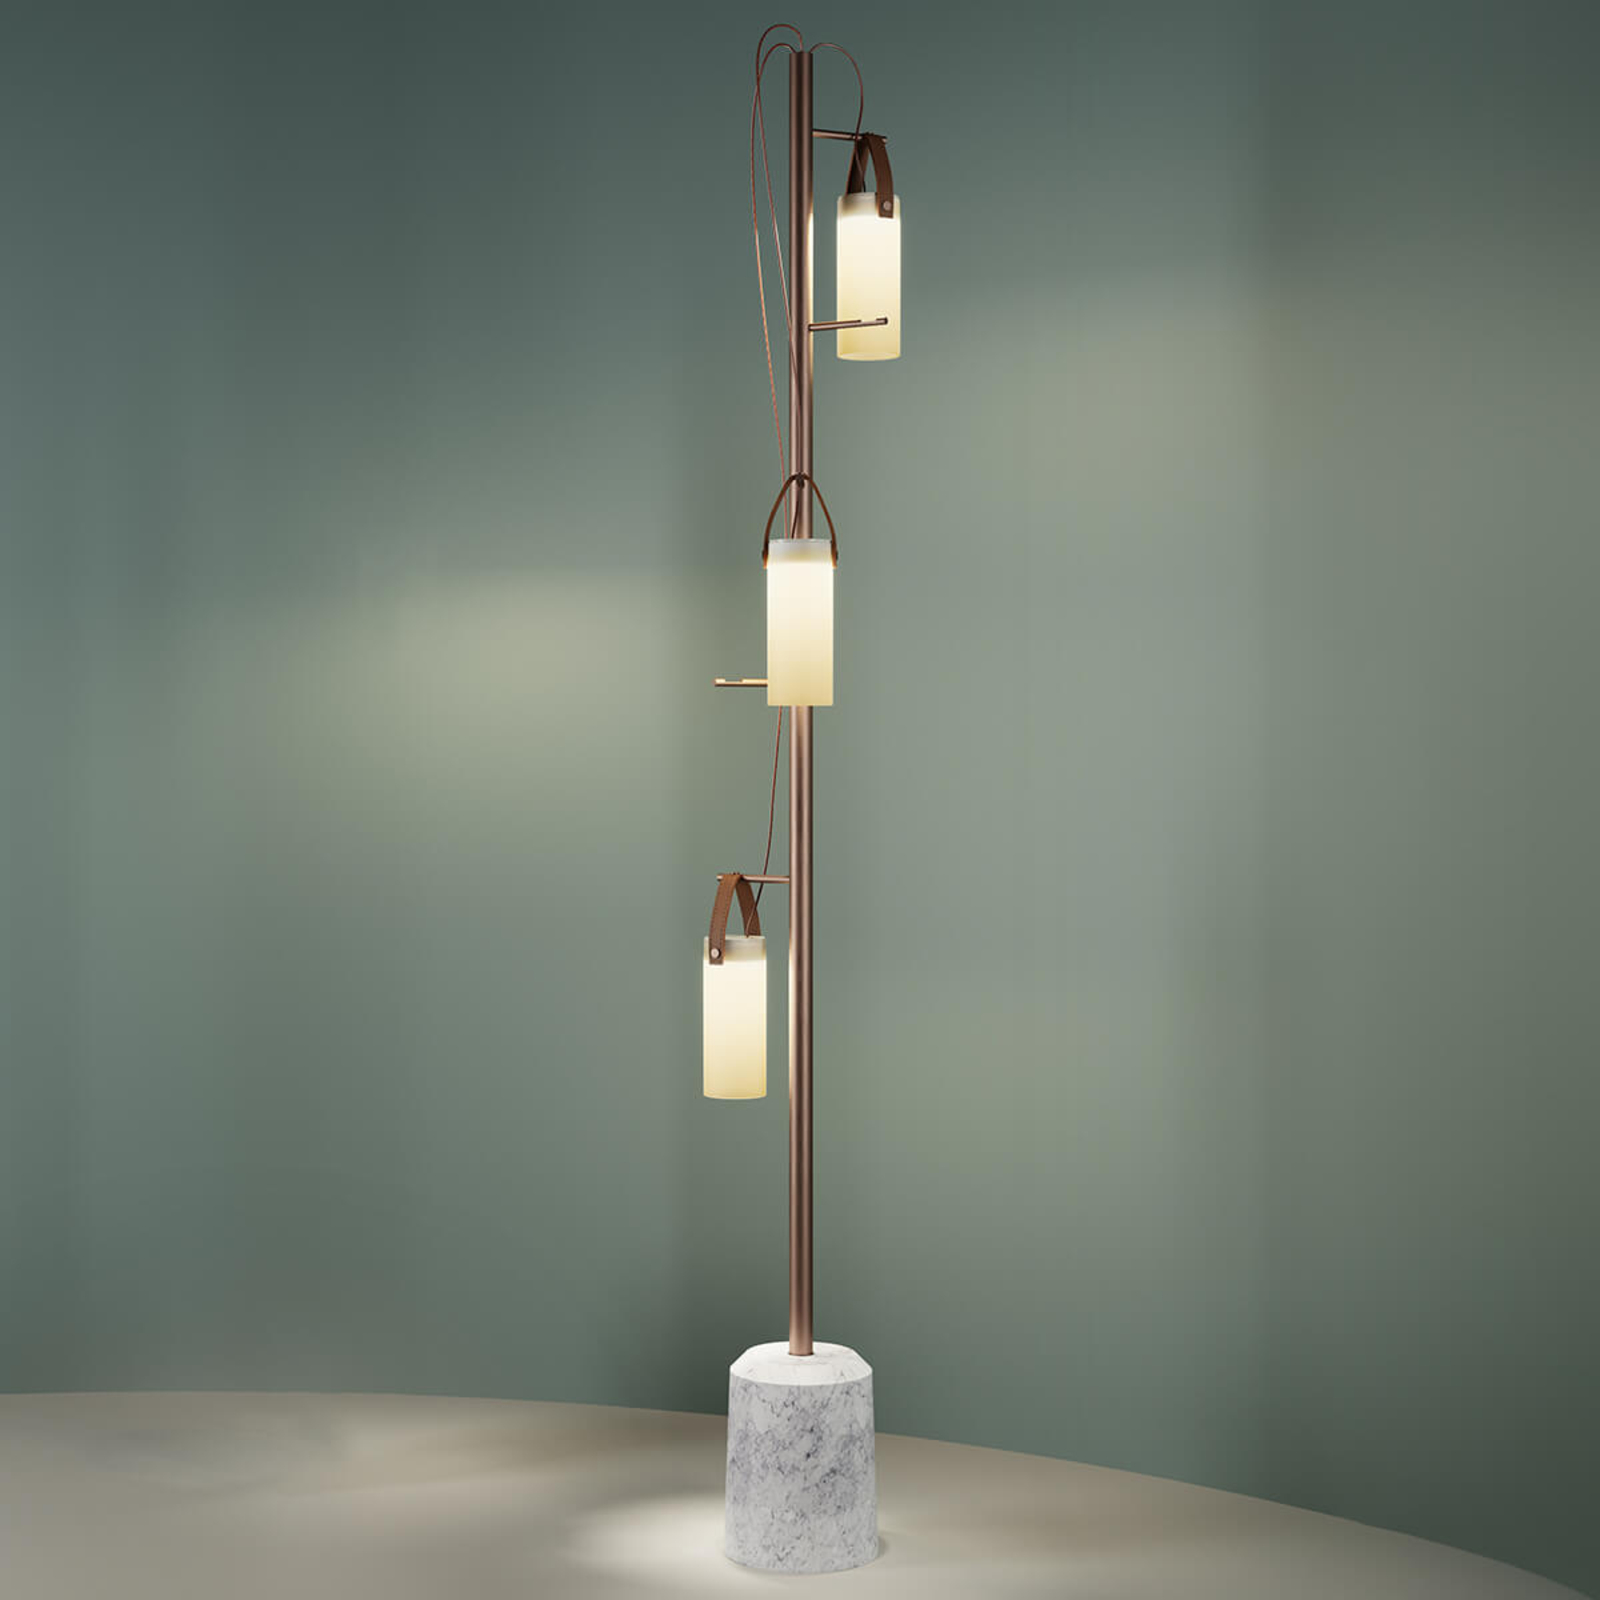 LED design vloerlamp Galerie met lampen | Lampen24.be